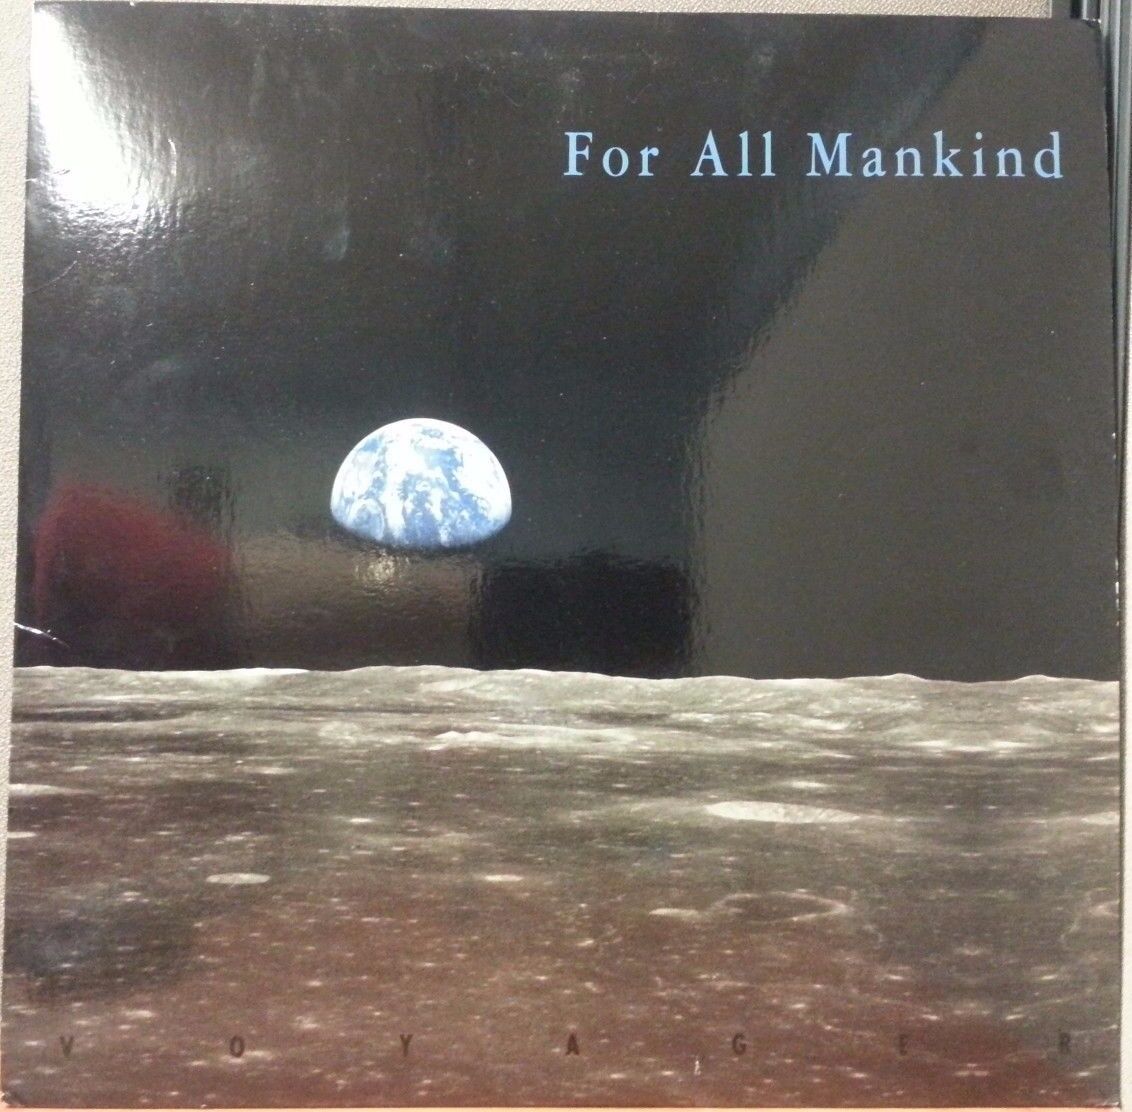 For All Mankind Laserdisc Apollo Space Program 1968-72 (ld, 1989, V1018l) Ln